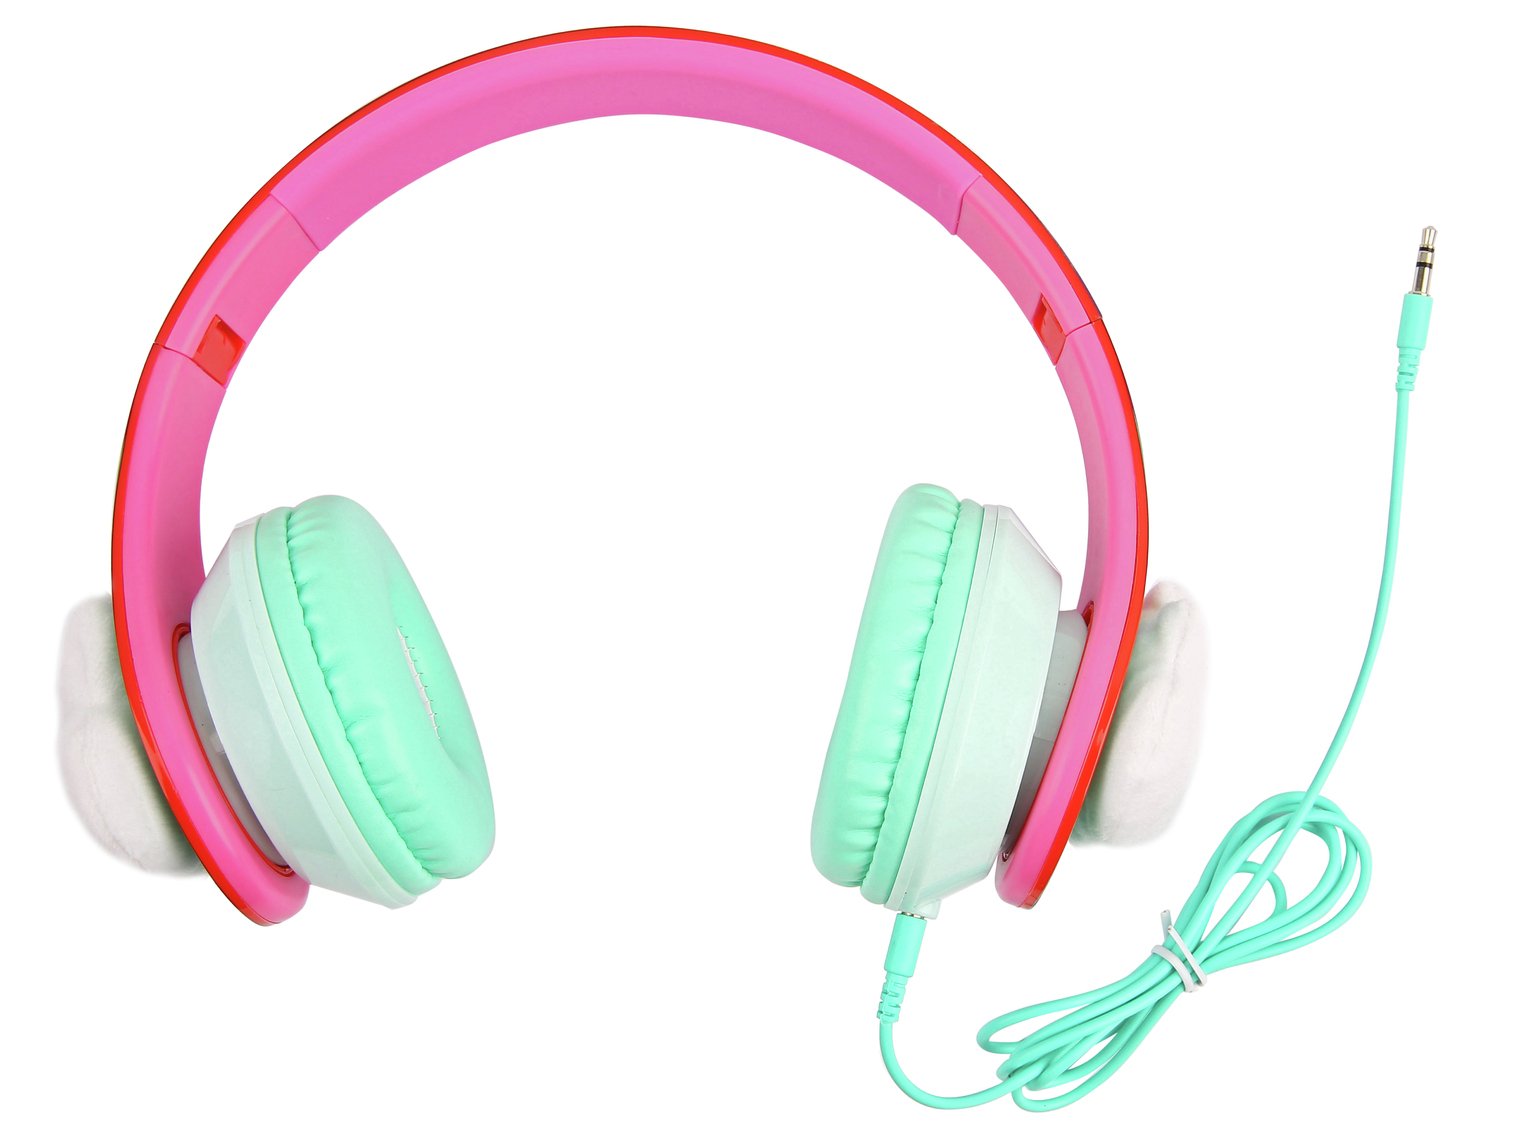 Imagination Station Rainbow Headphones